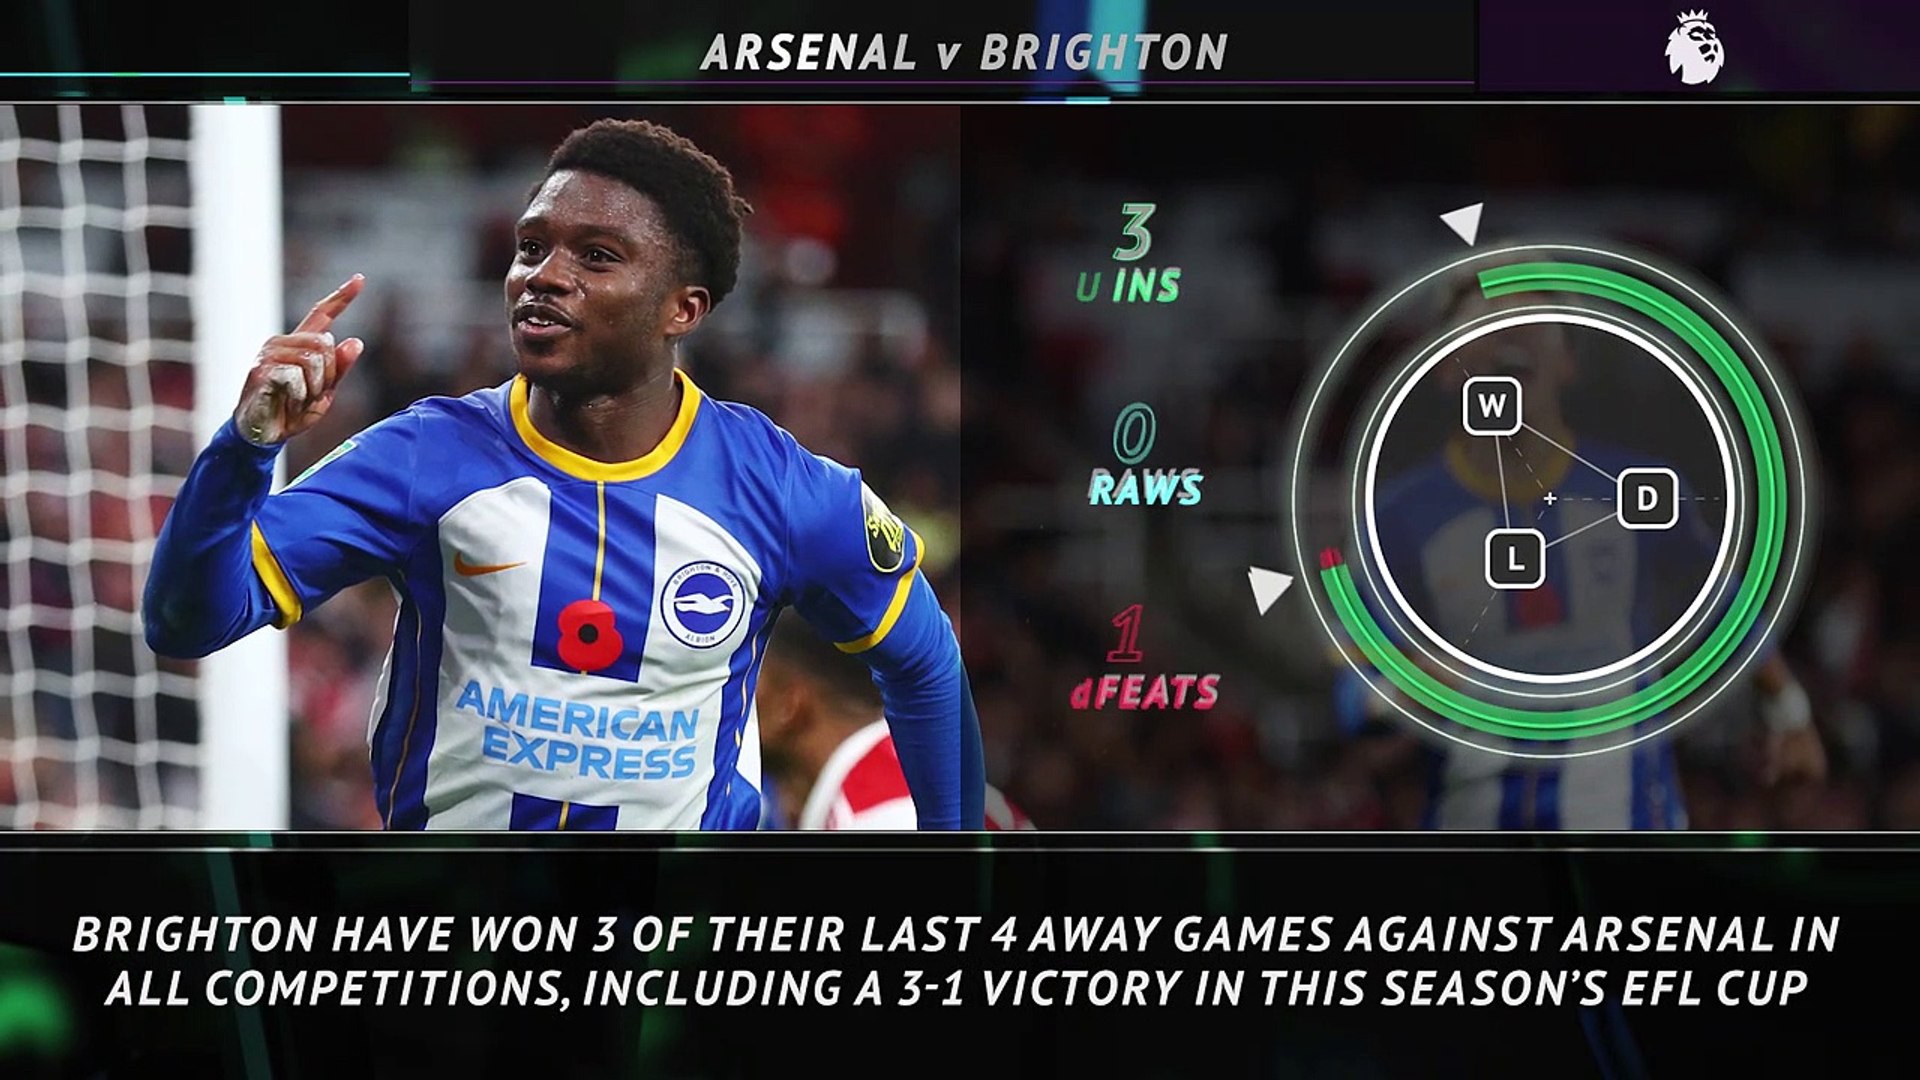 Big Match Focus - Arsenal v Brighton